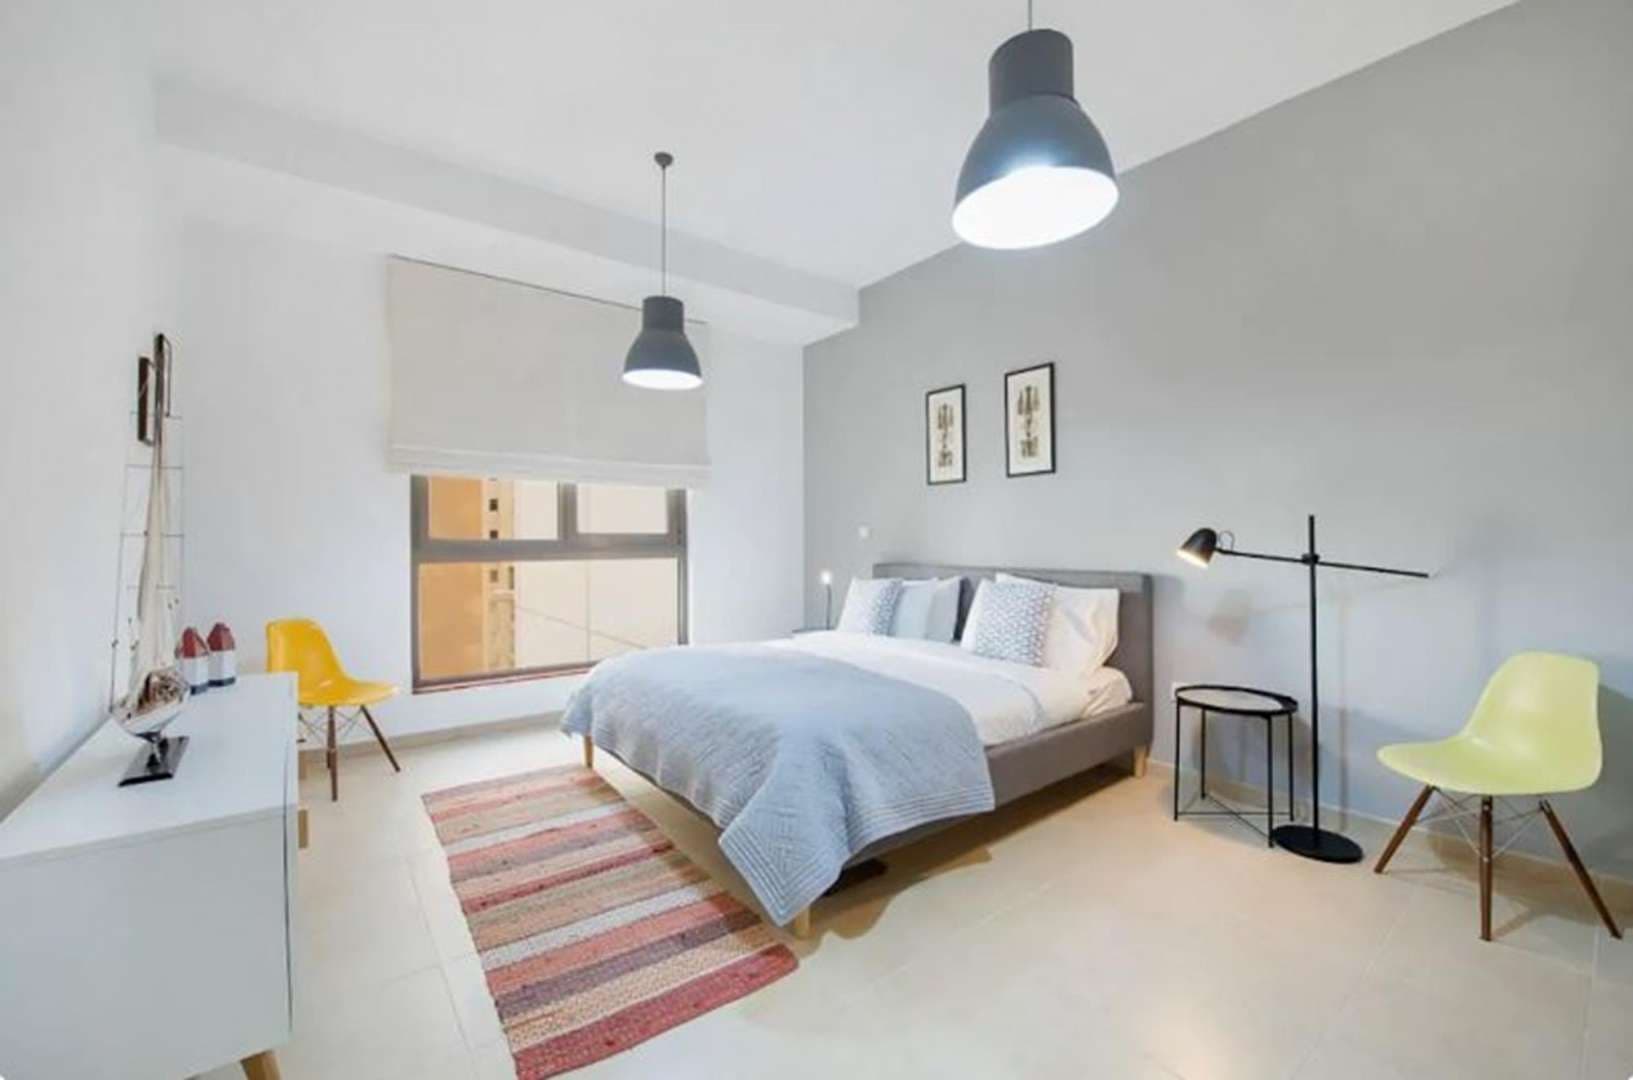 2 Bedroom Apartment For Rent Amwaj 4 Lp04977 27441d687ffba000.jpg